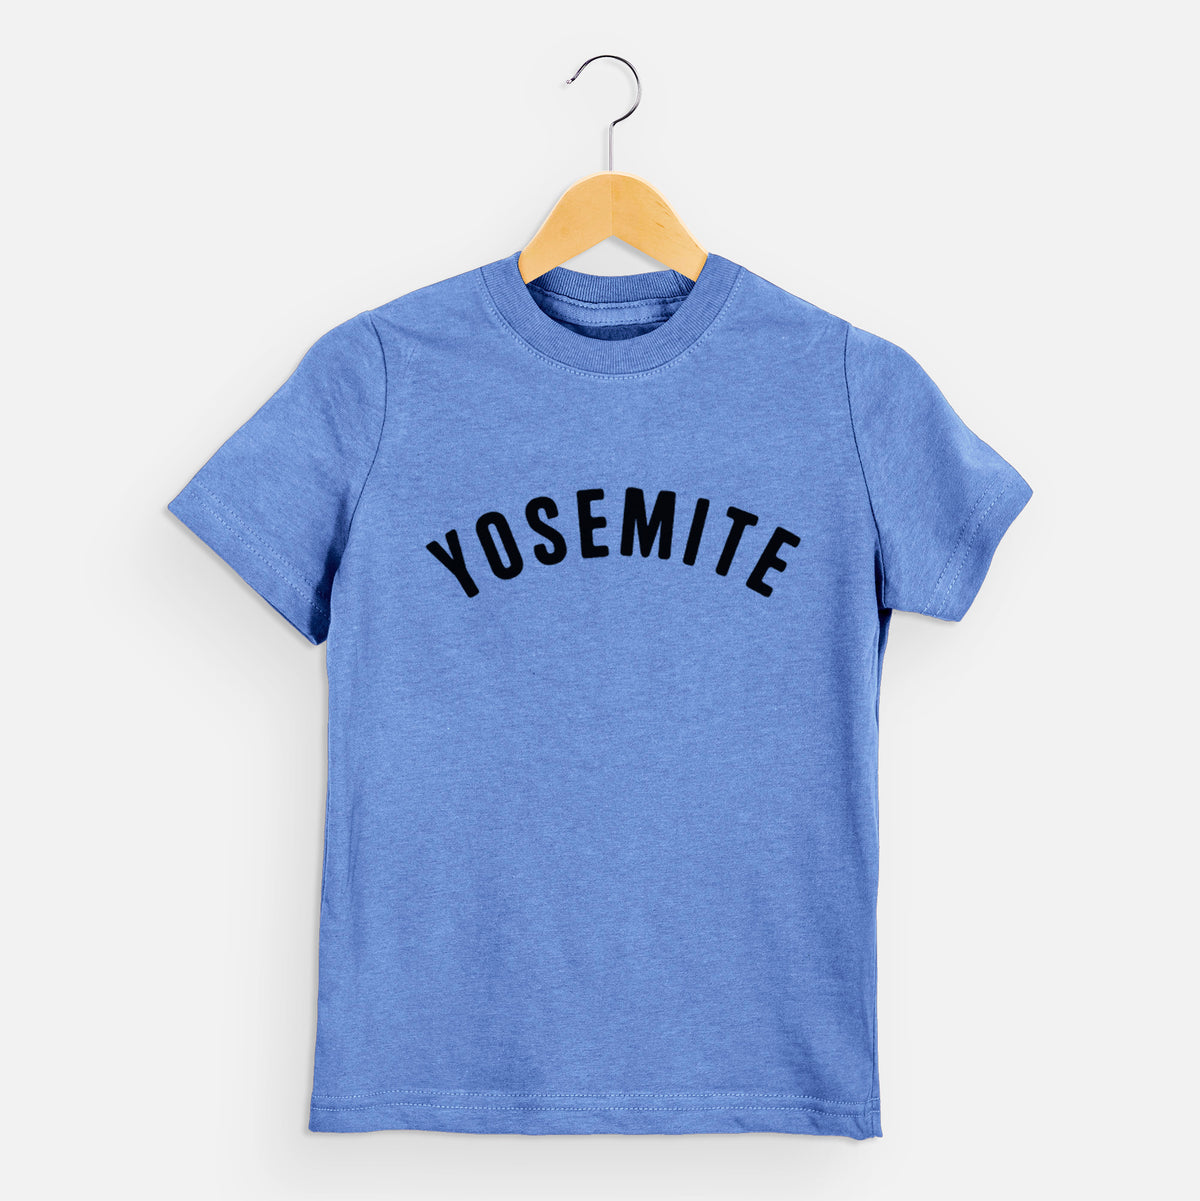 Yosemite - Kids Shirt